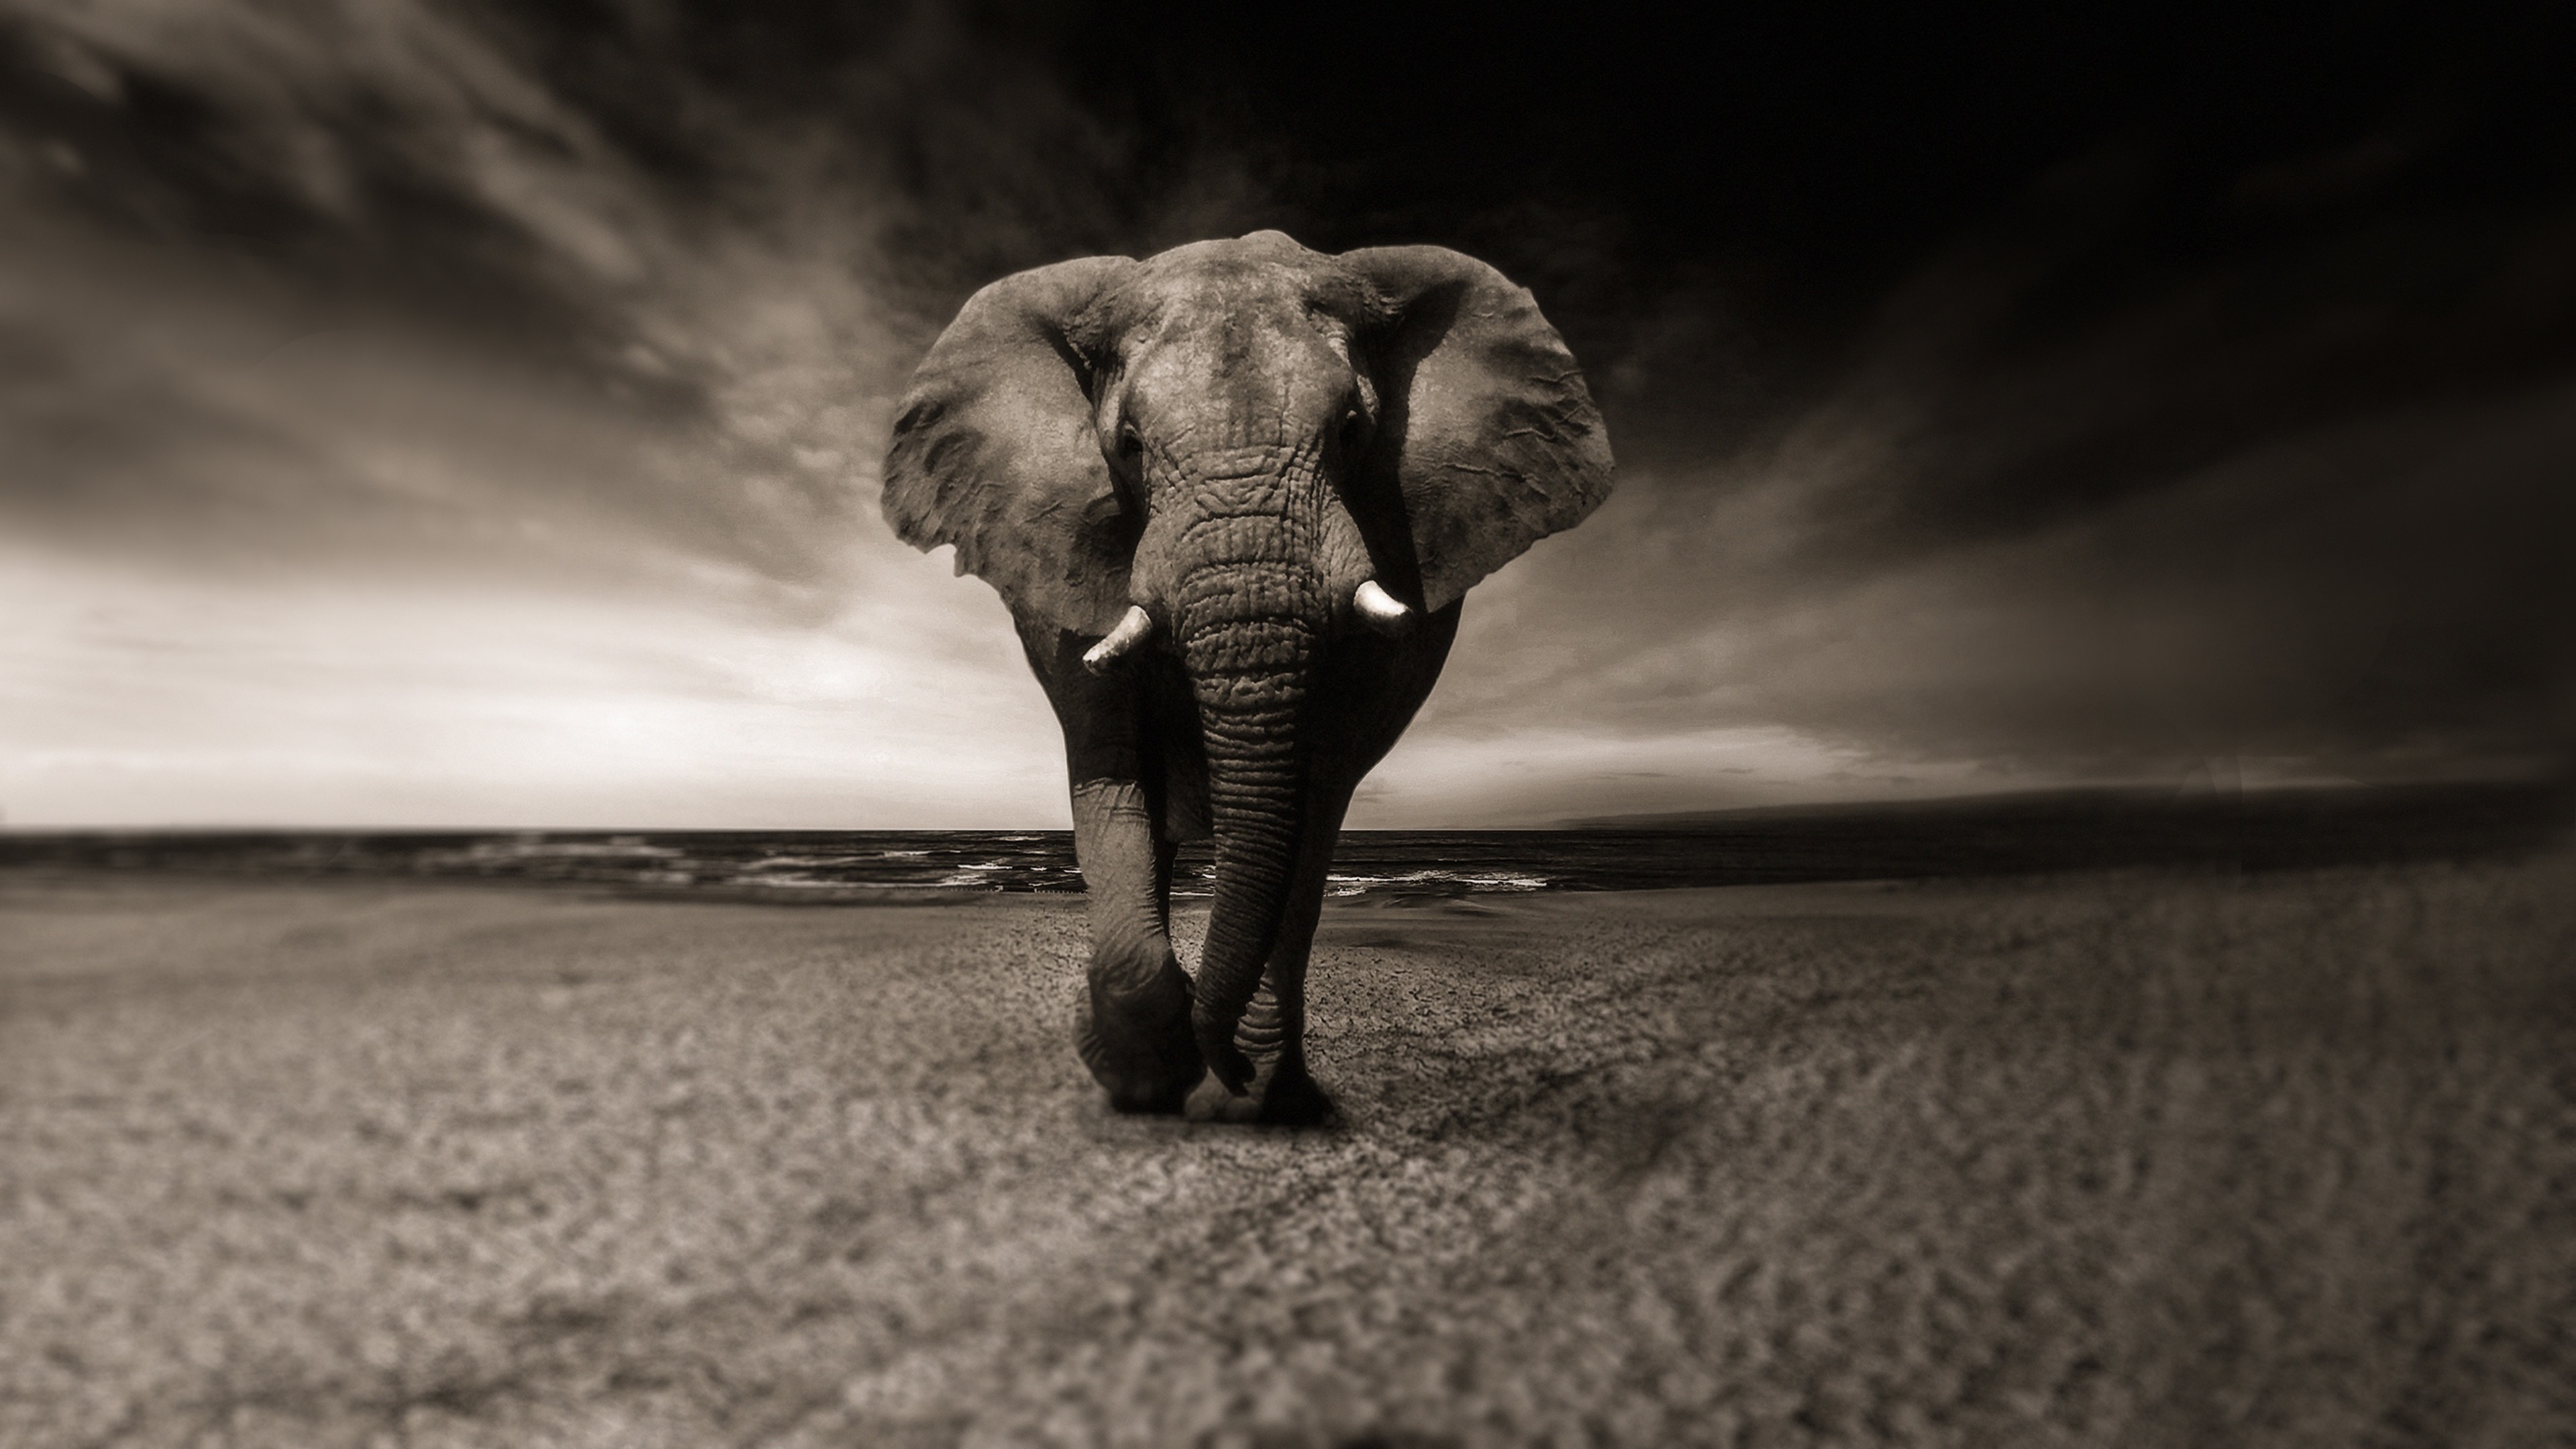 3840x2160, African Elephant 4k Chromebook Wallpaper - Elephant Wallpaper 4k - HD Wallpaper 